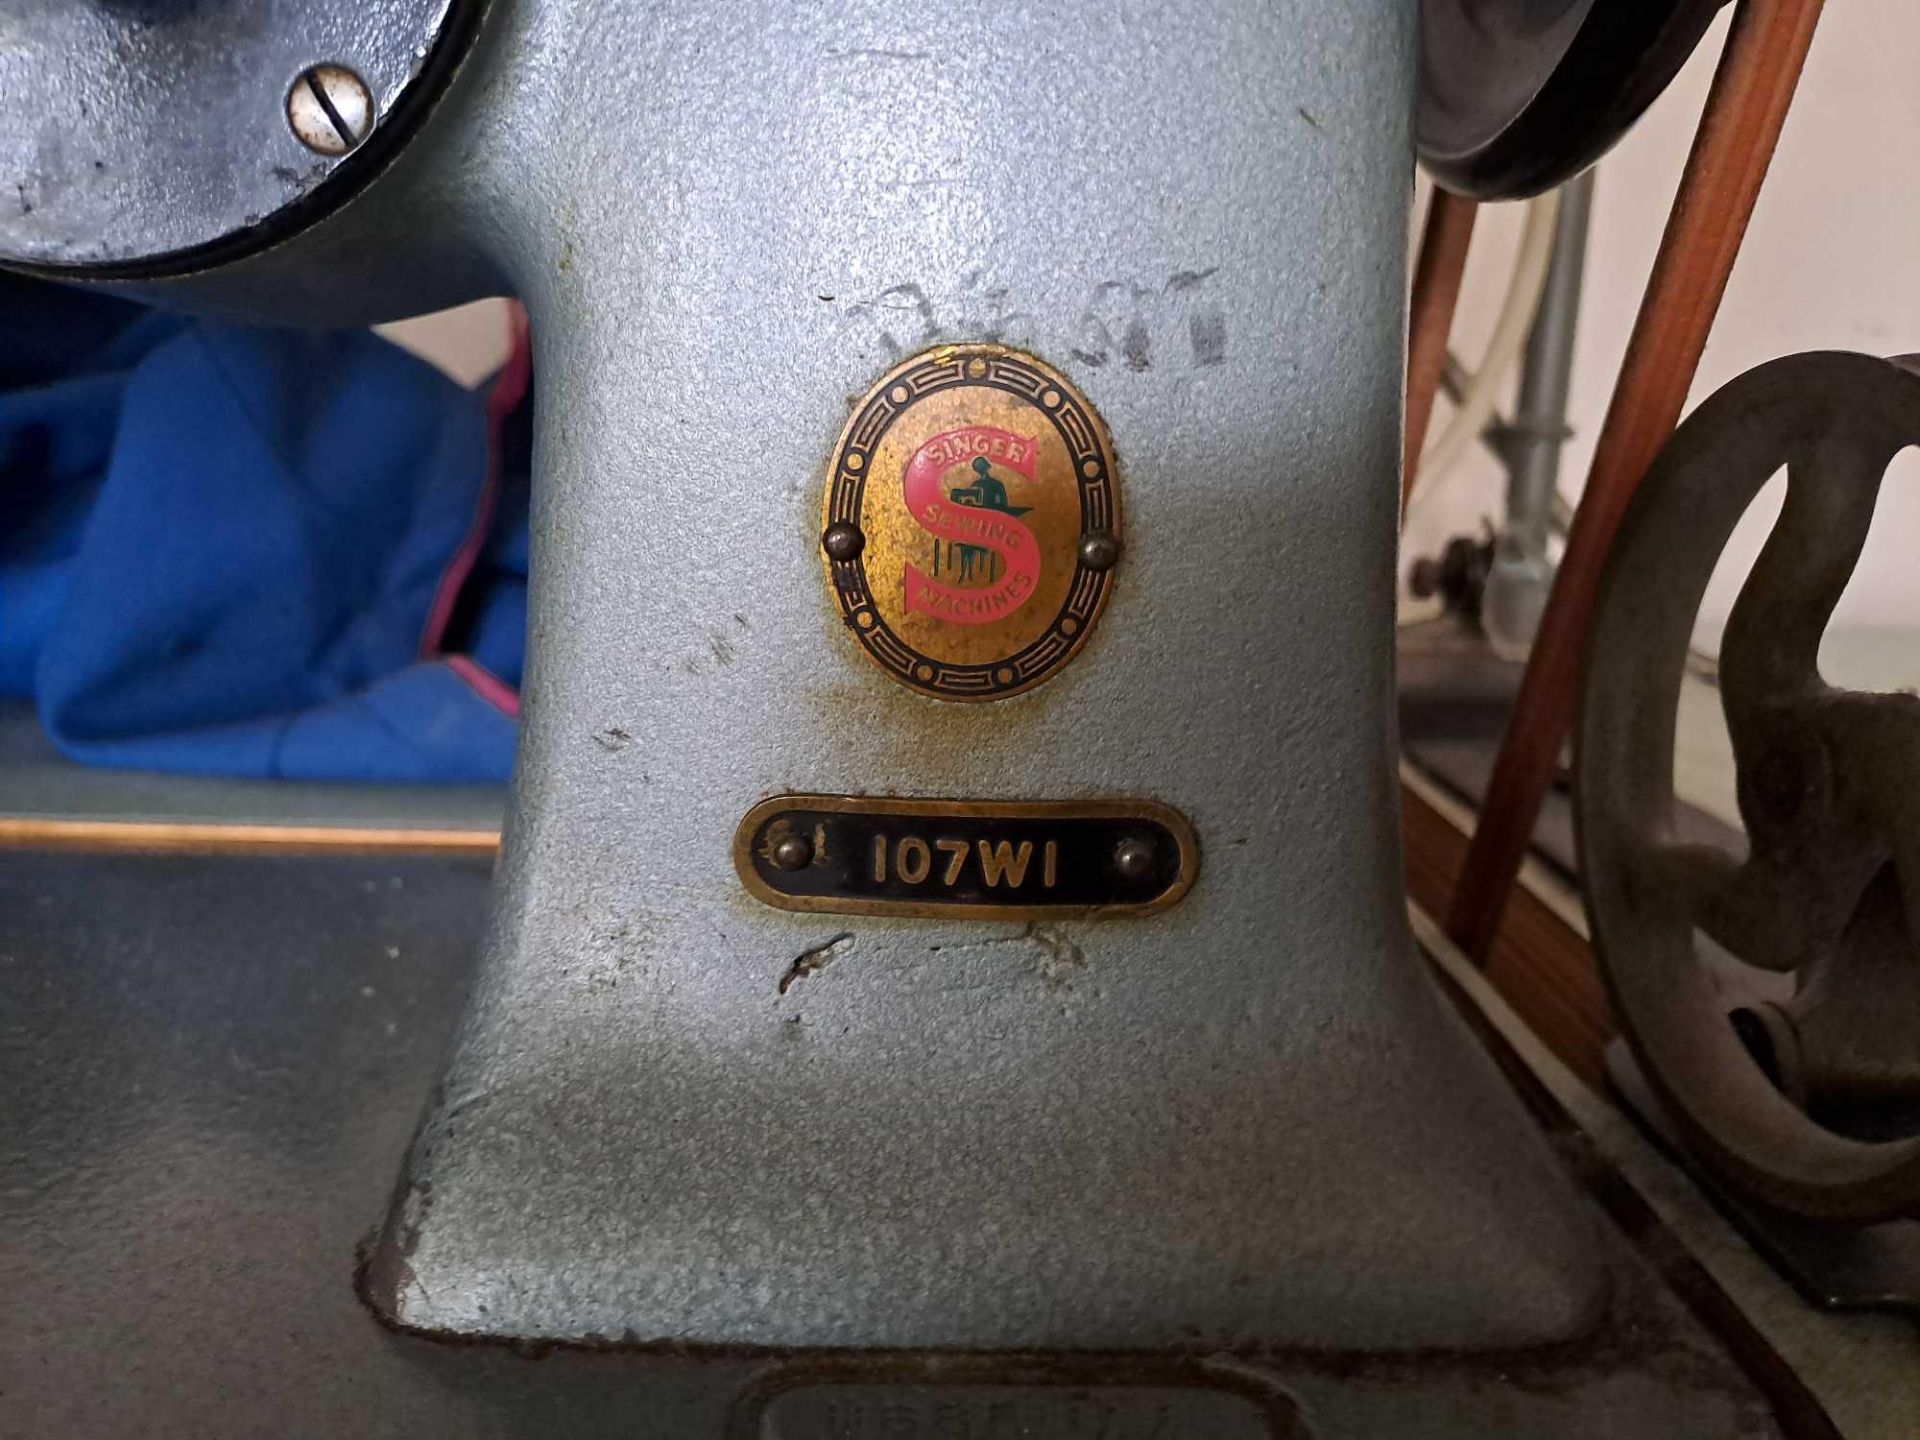 Singer 107W1 Sewing Machine - Image 3 of 6